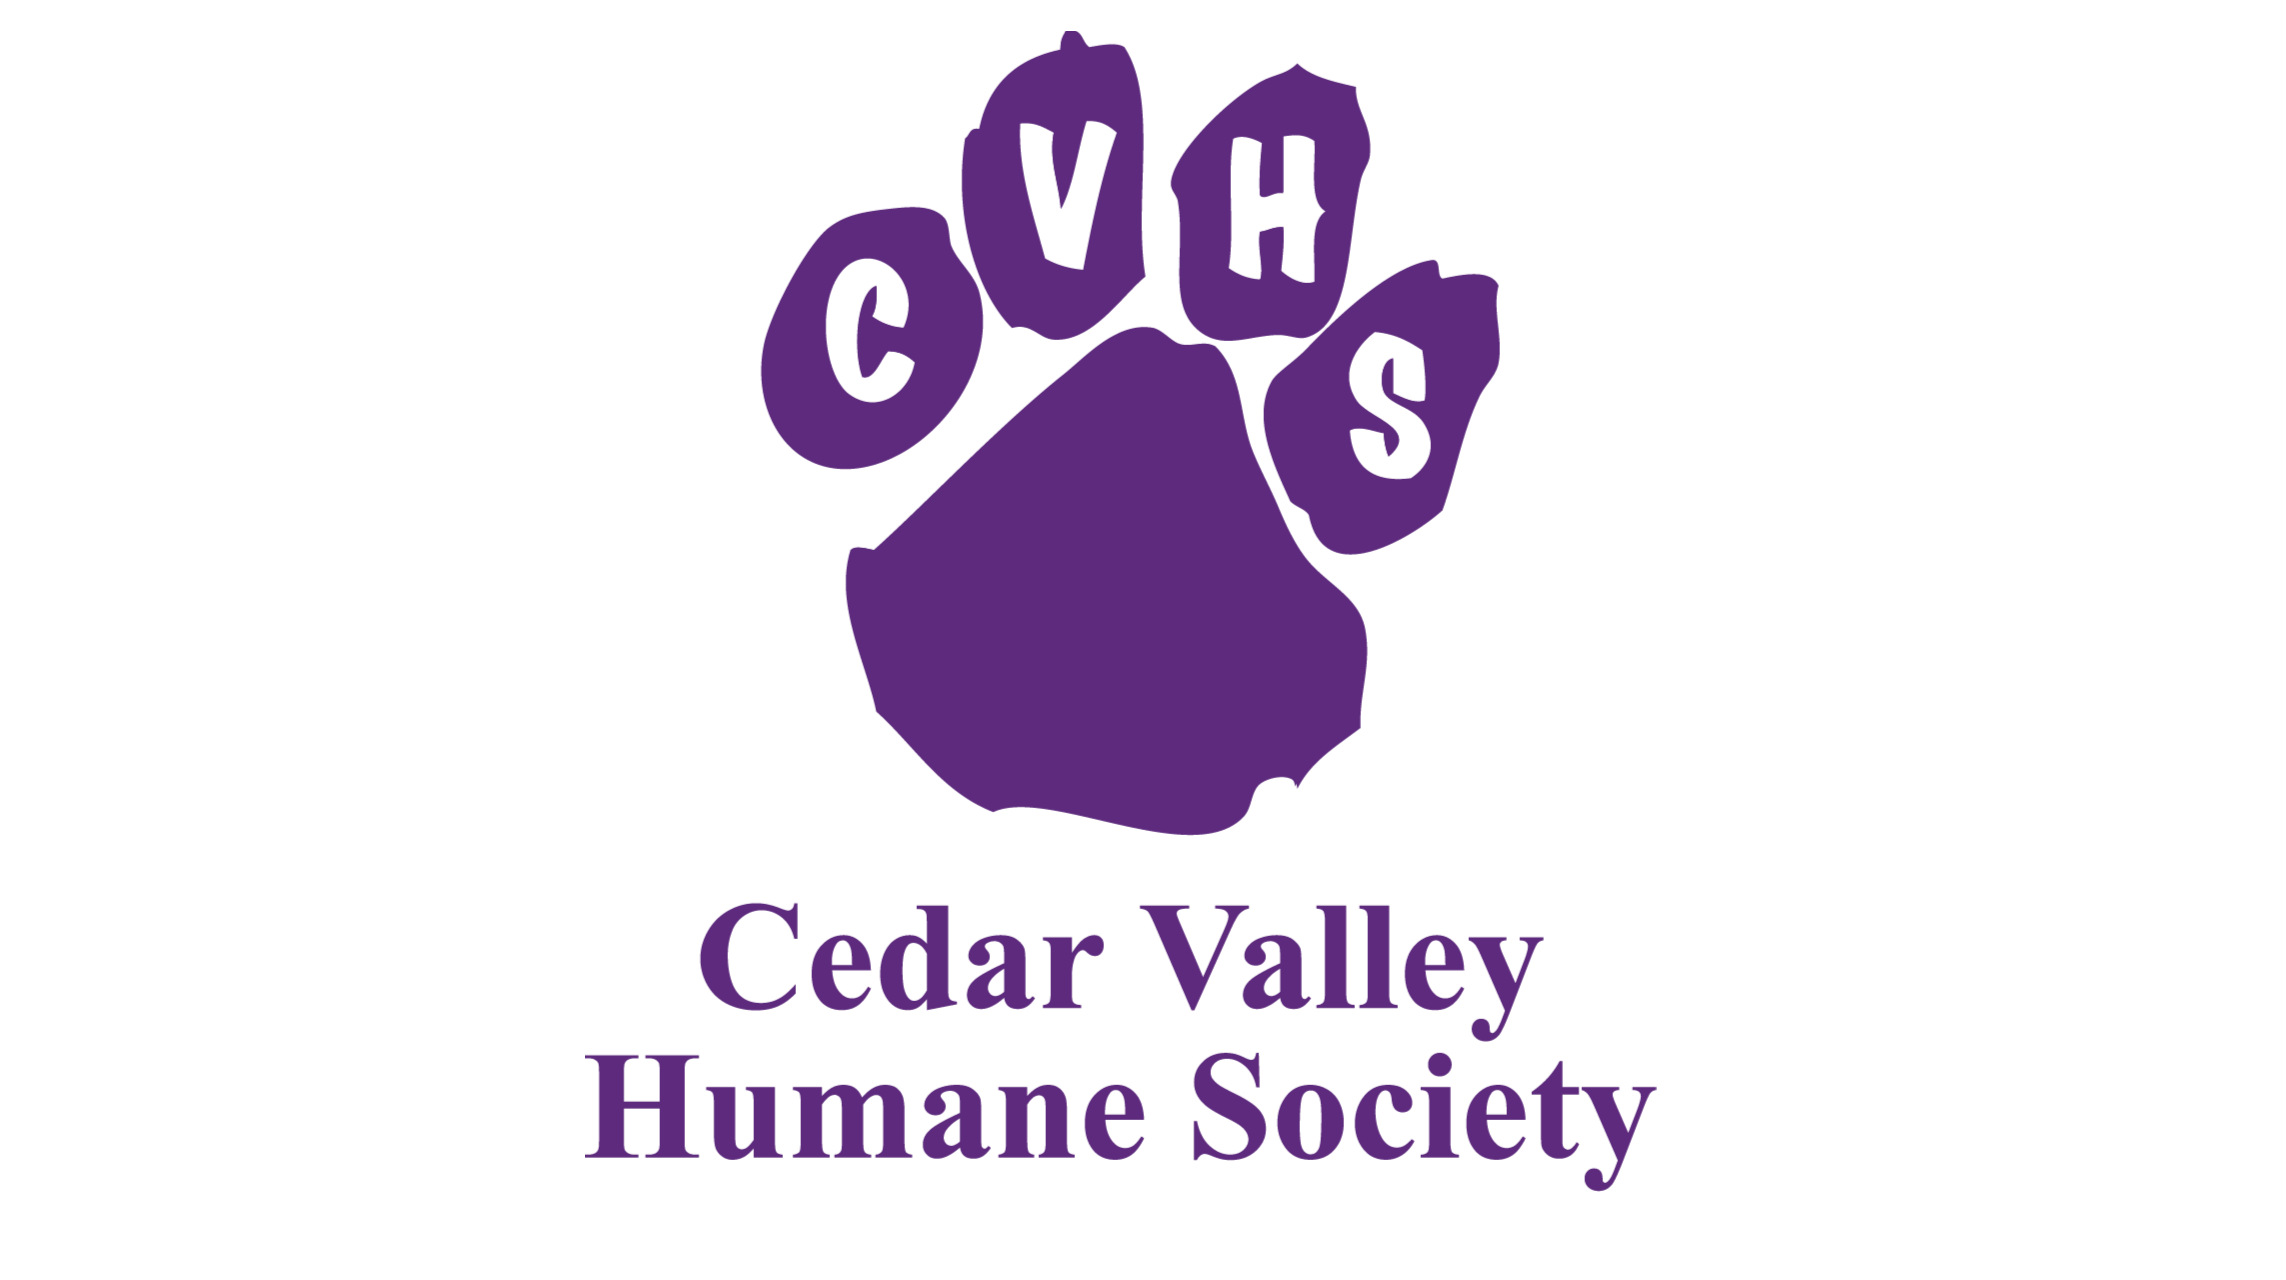 Cedar Valley Humane Society